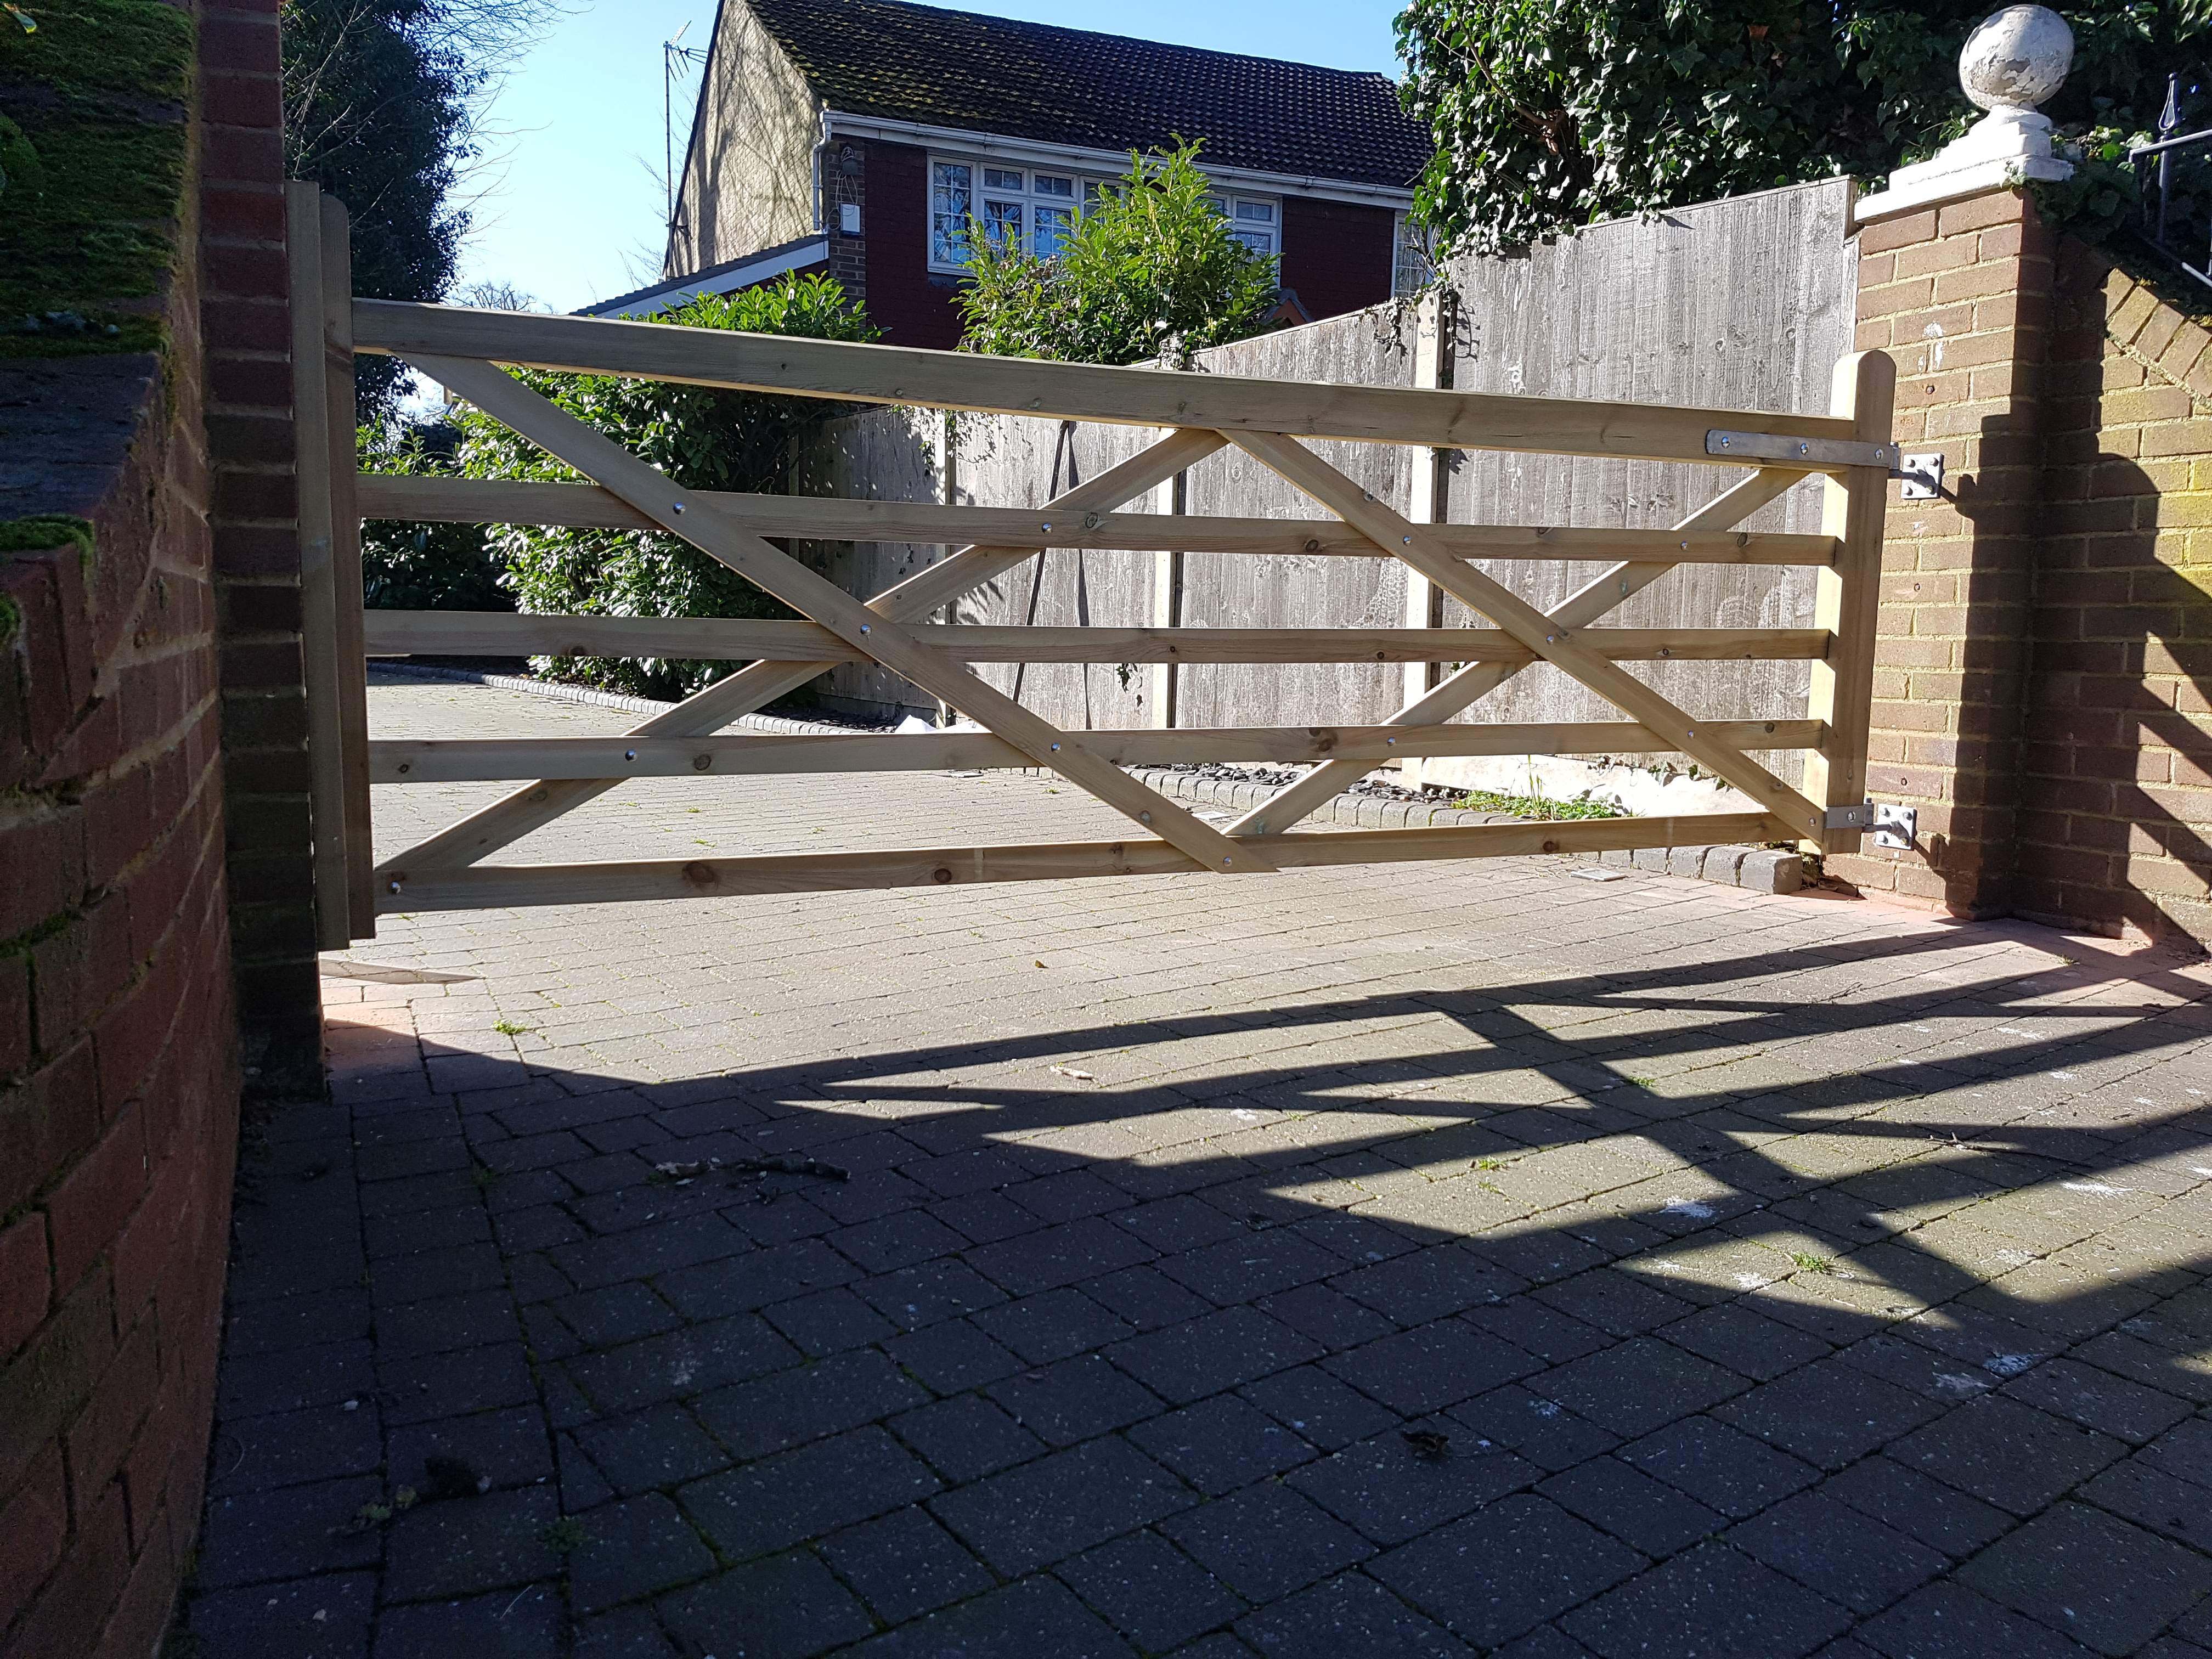 5 bar gate, fencing installed in New Barn.